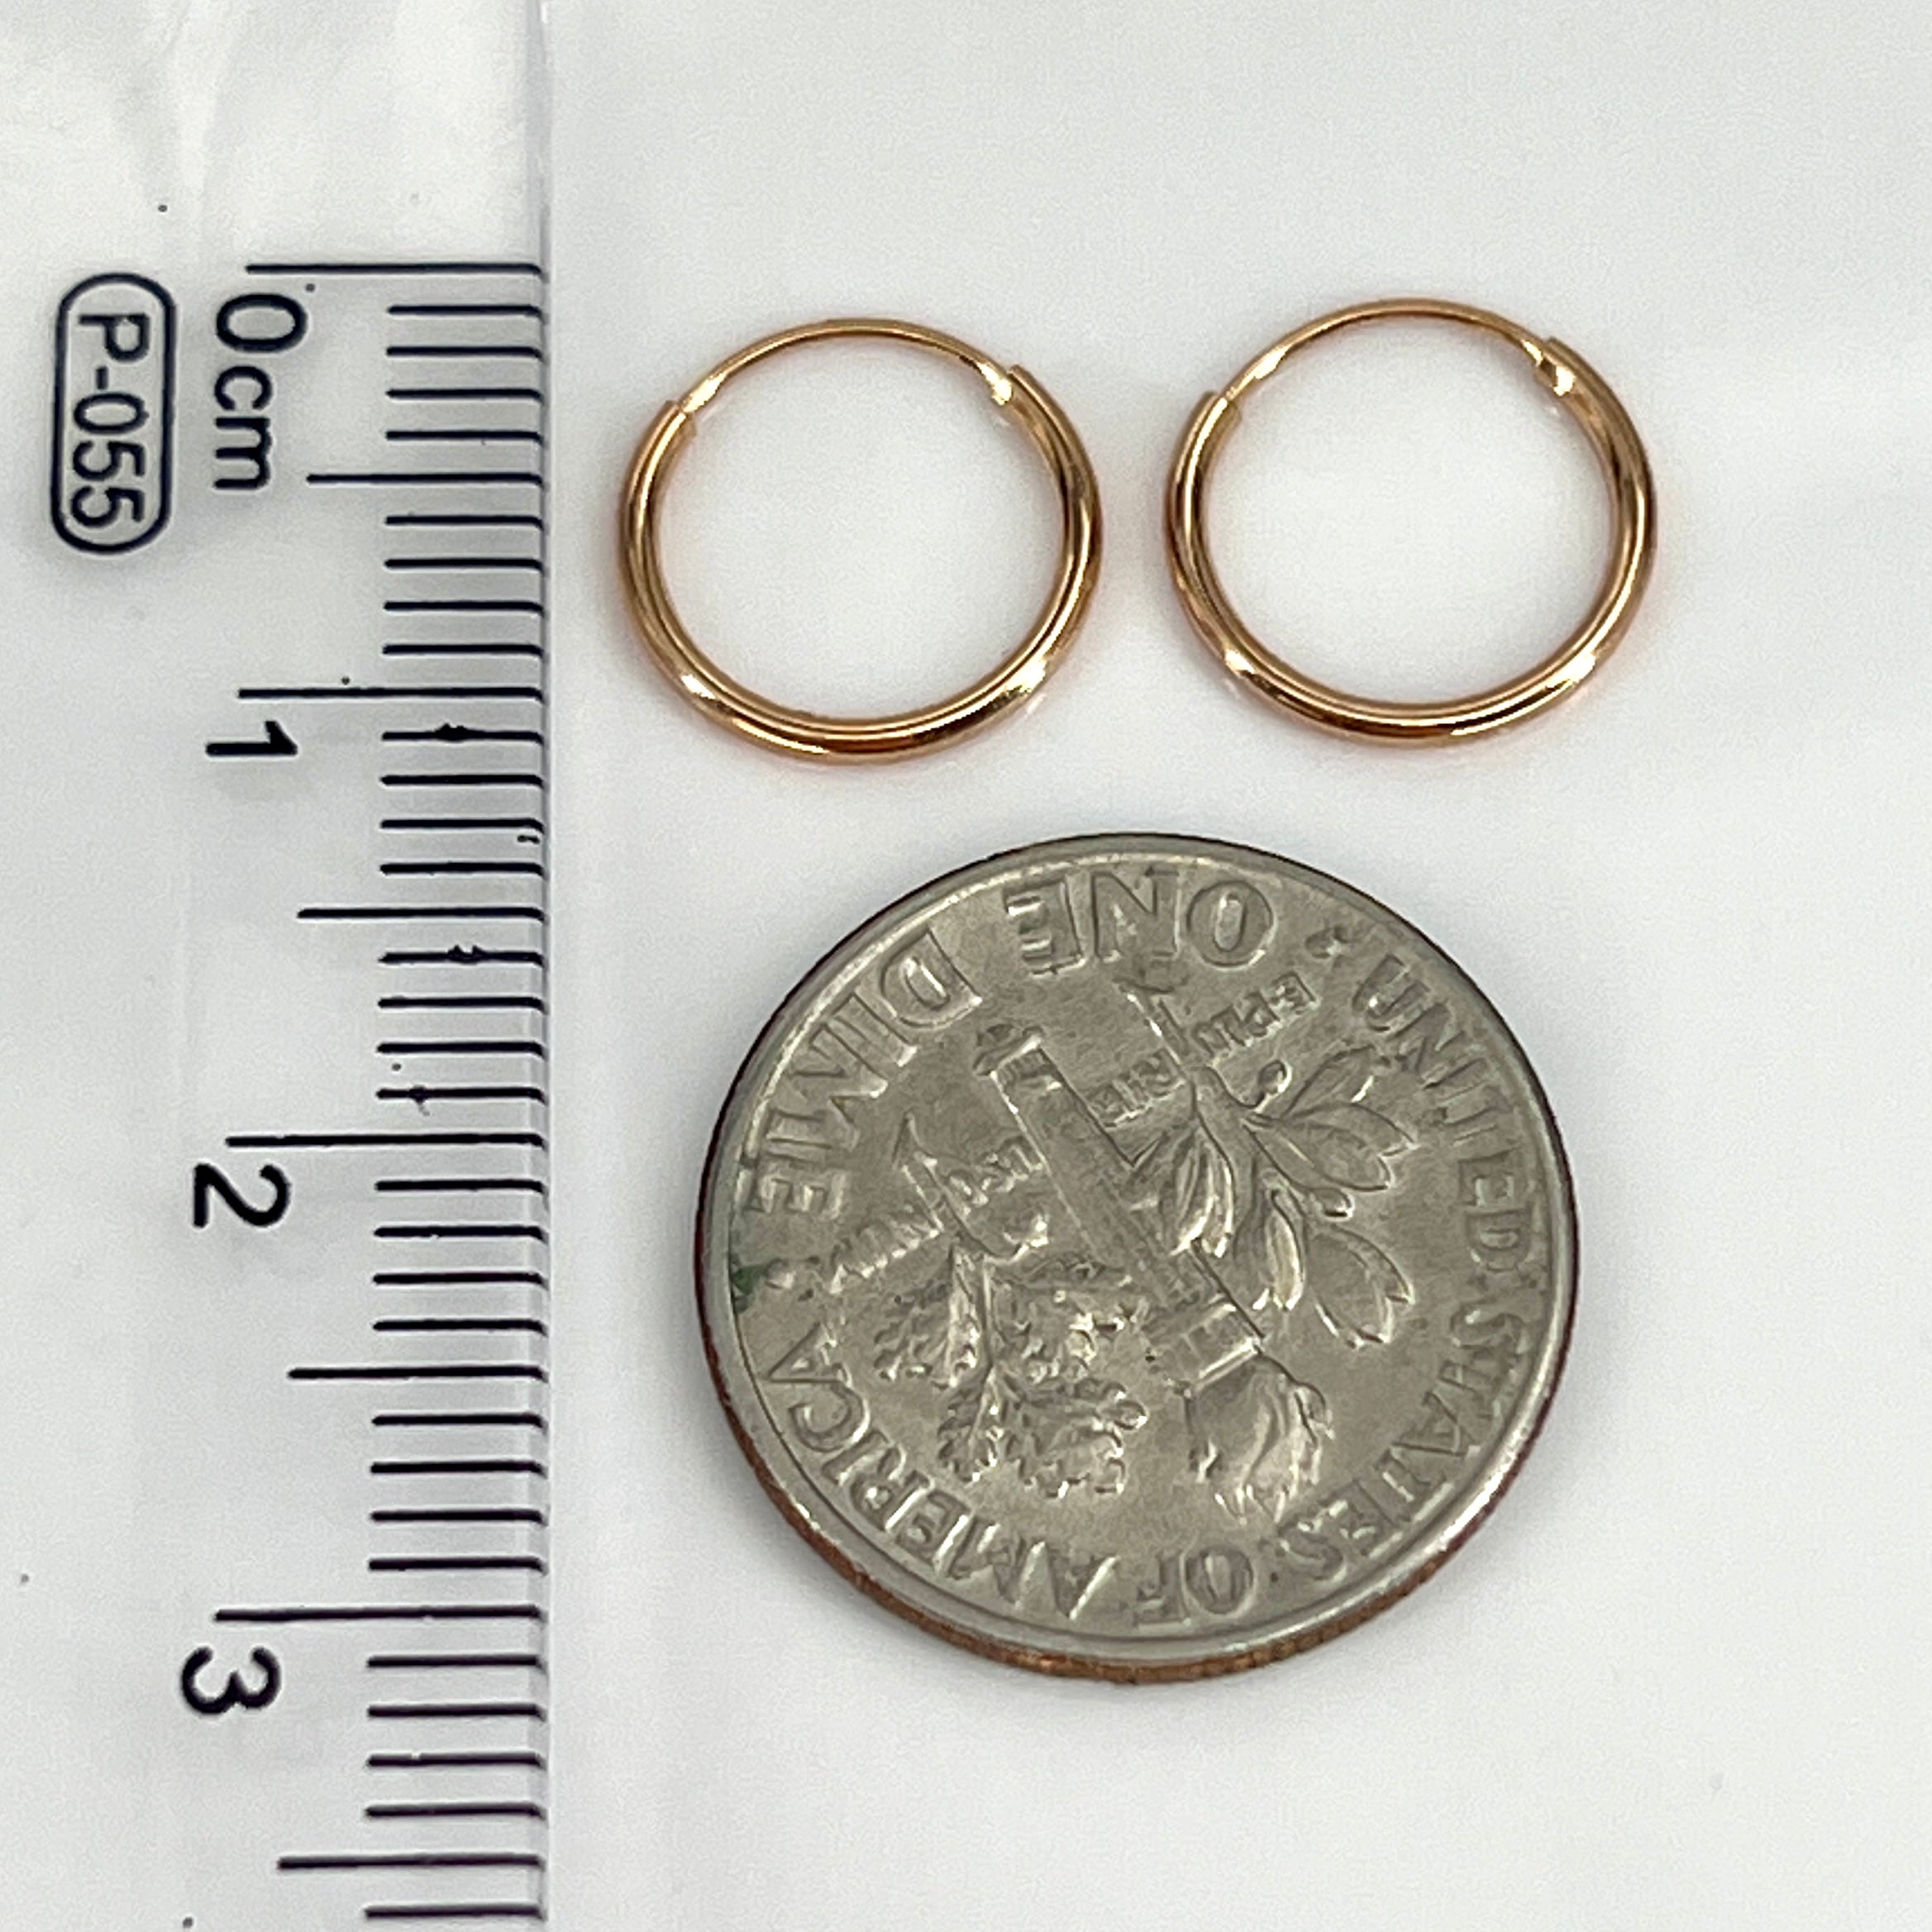 14K Rose Gold 10mm Small Hoop Earrings